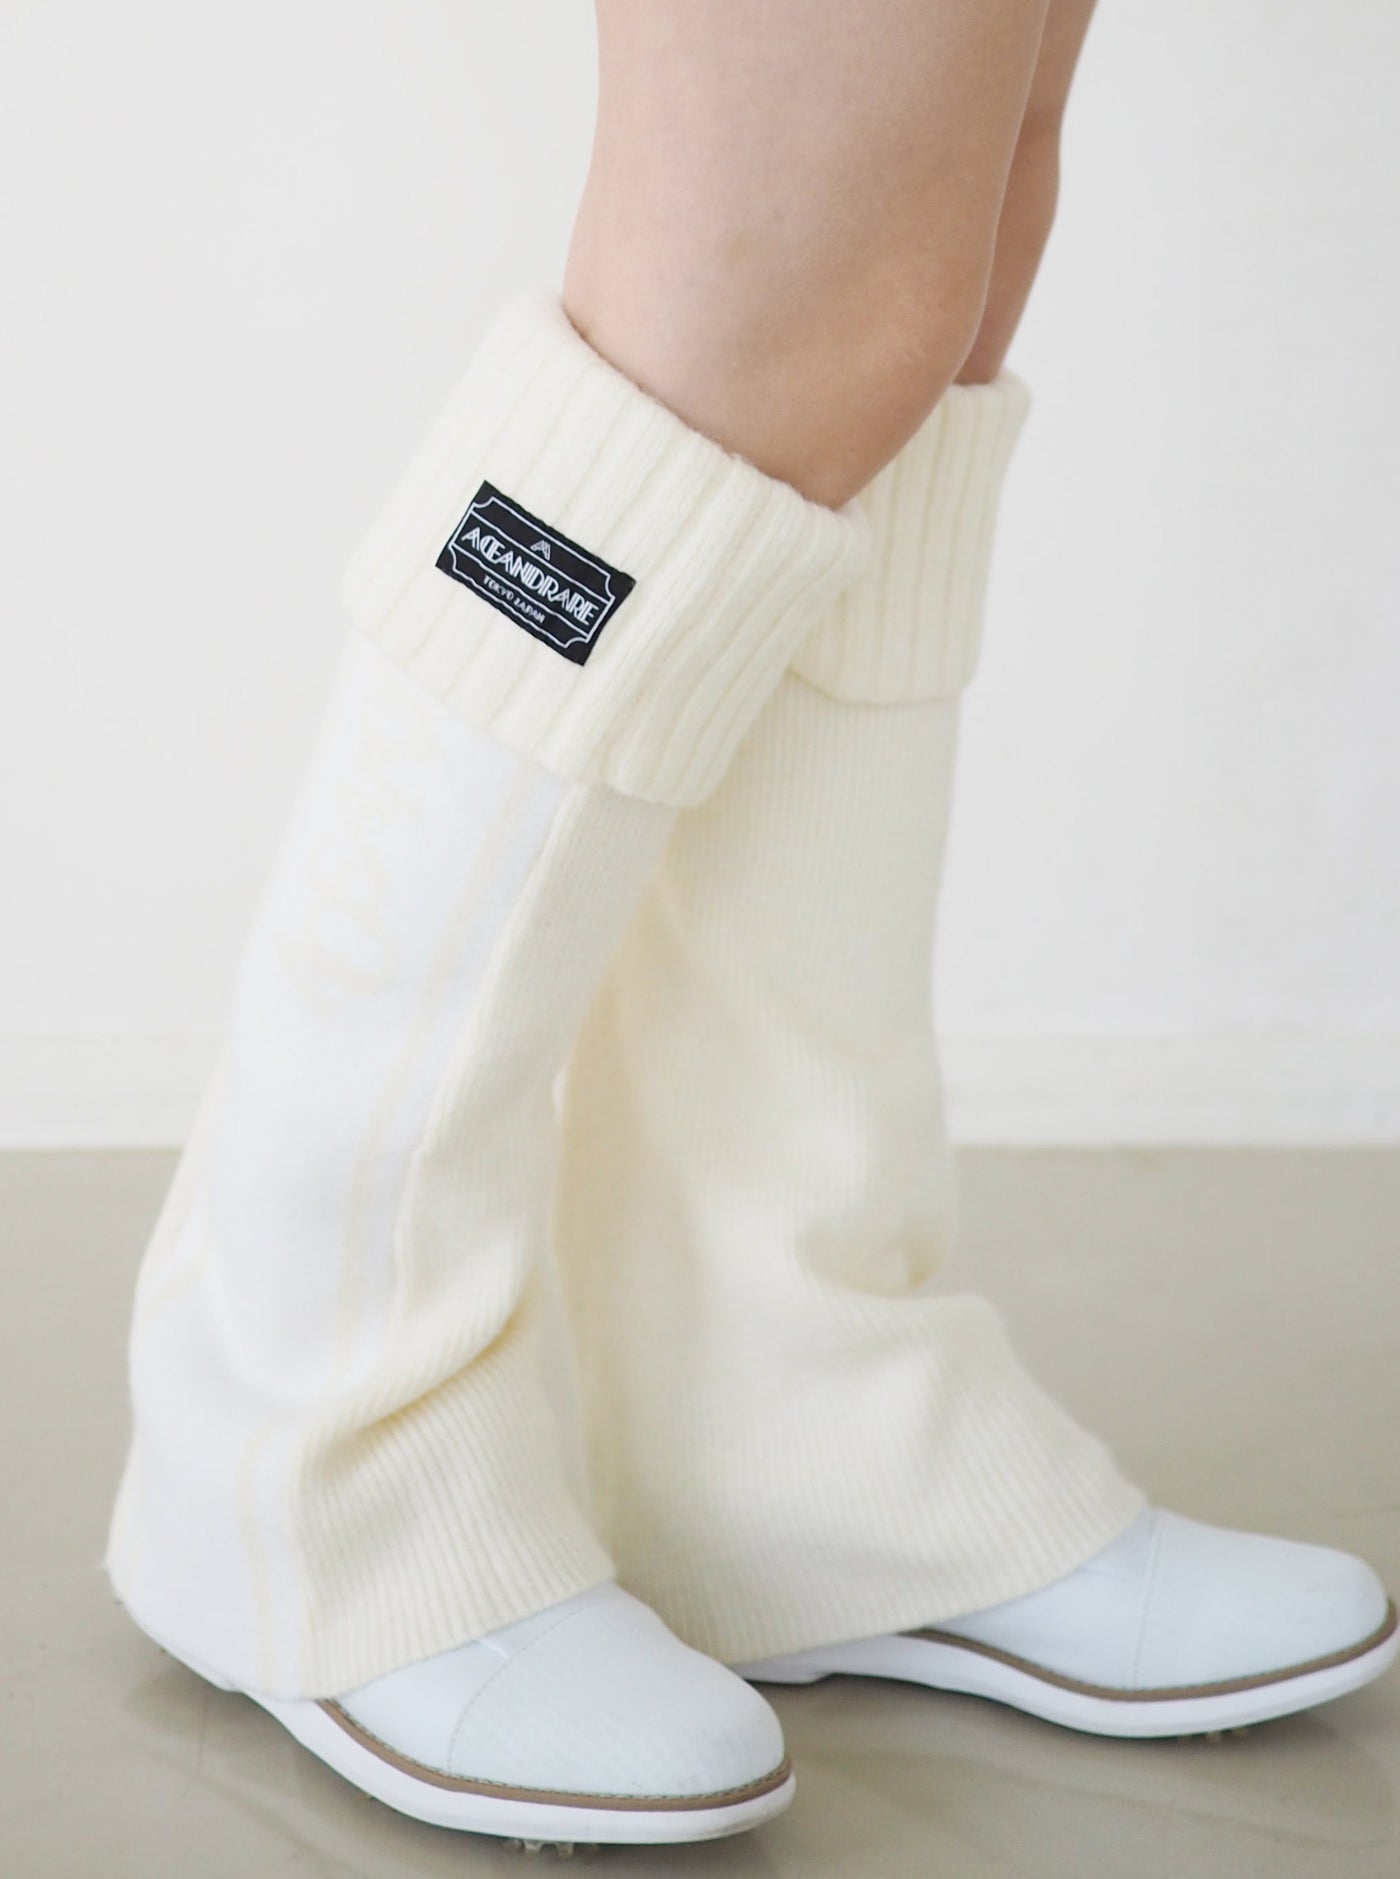 BOOTS CUT BLANKET LEG WARMER / WHITE